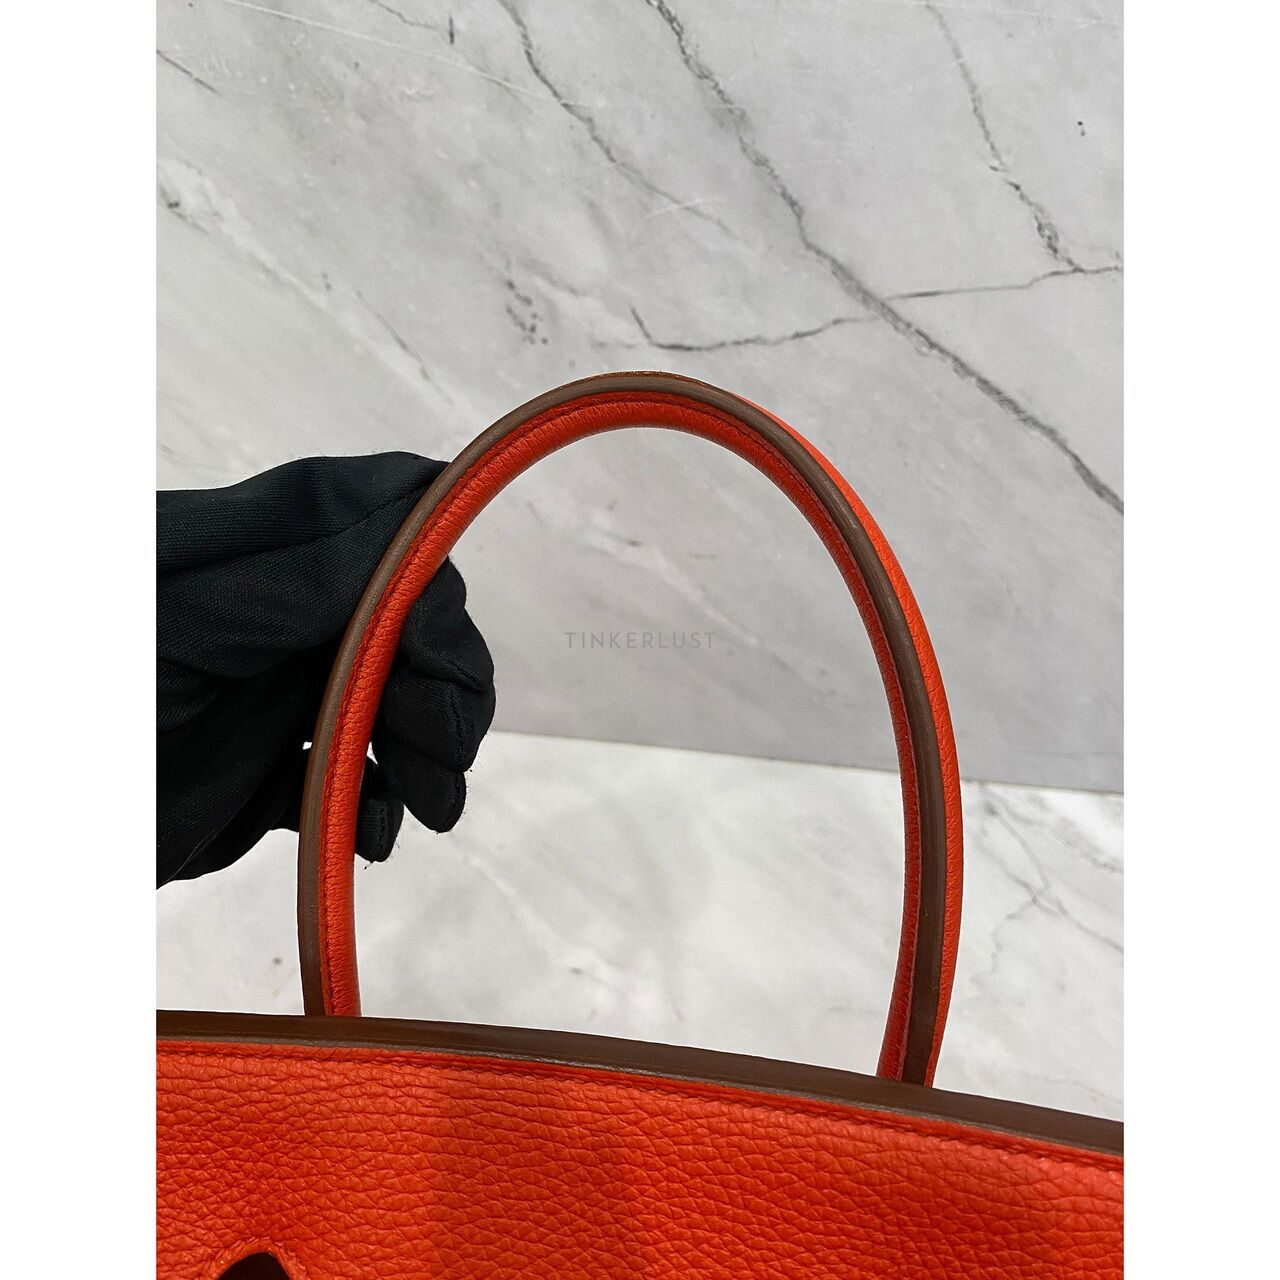 Hermes Birkin 35 Clemence Orange PHW #P Handbag